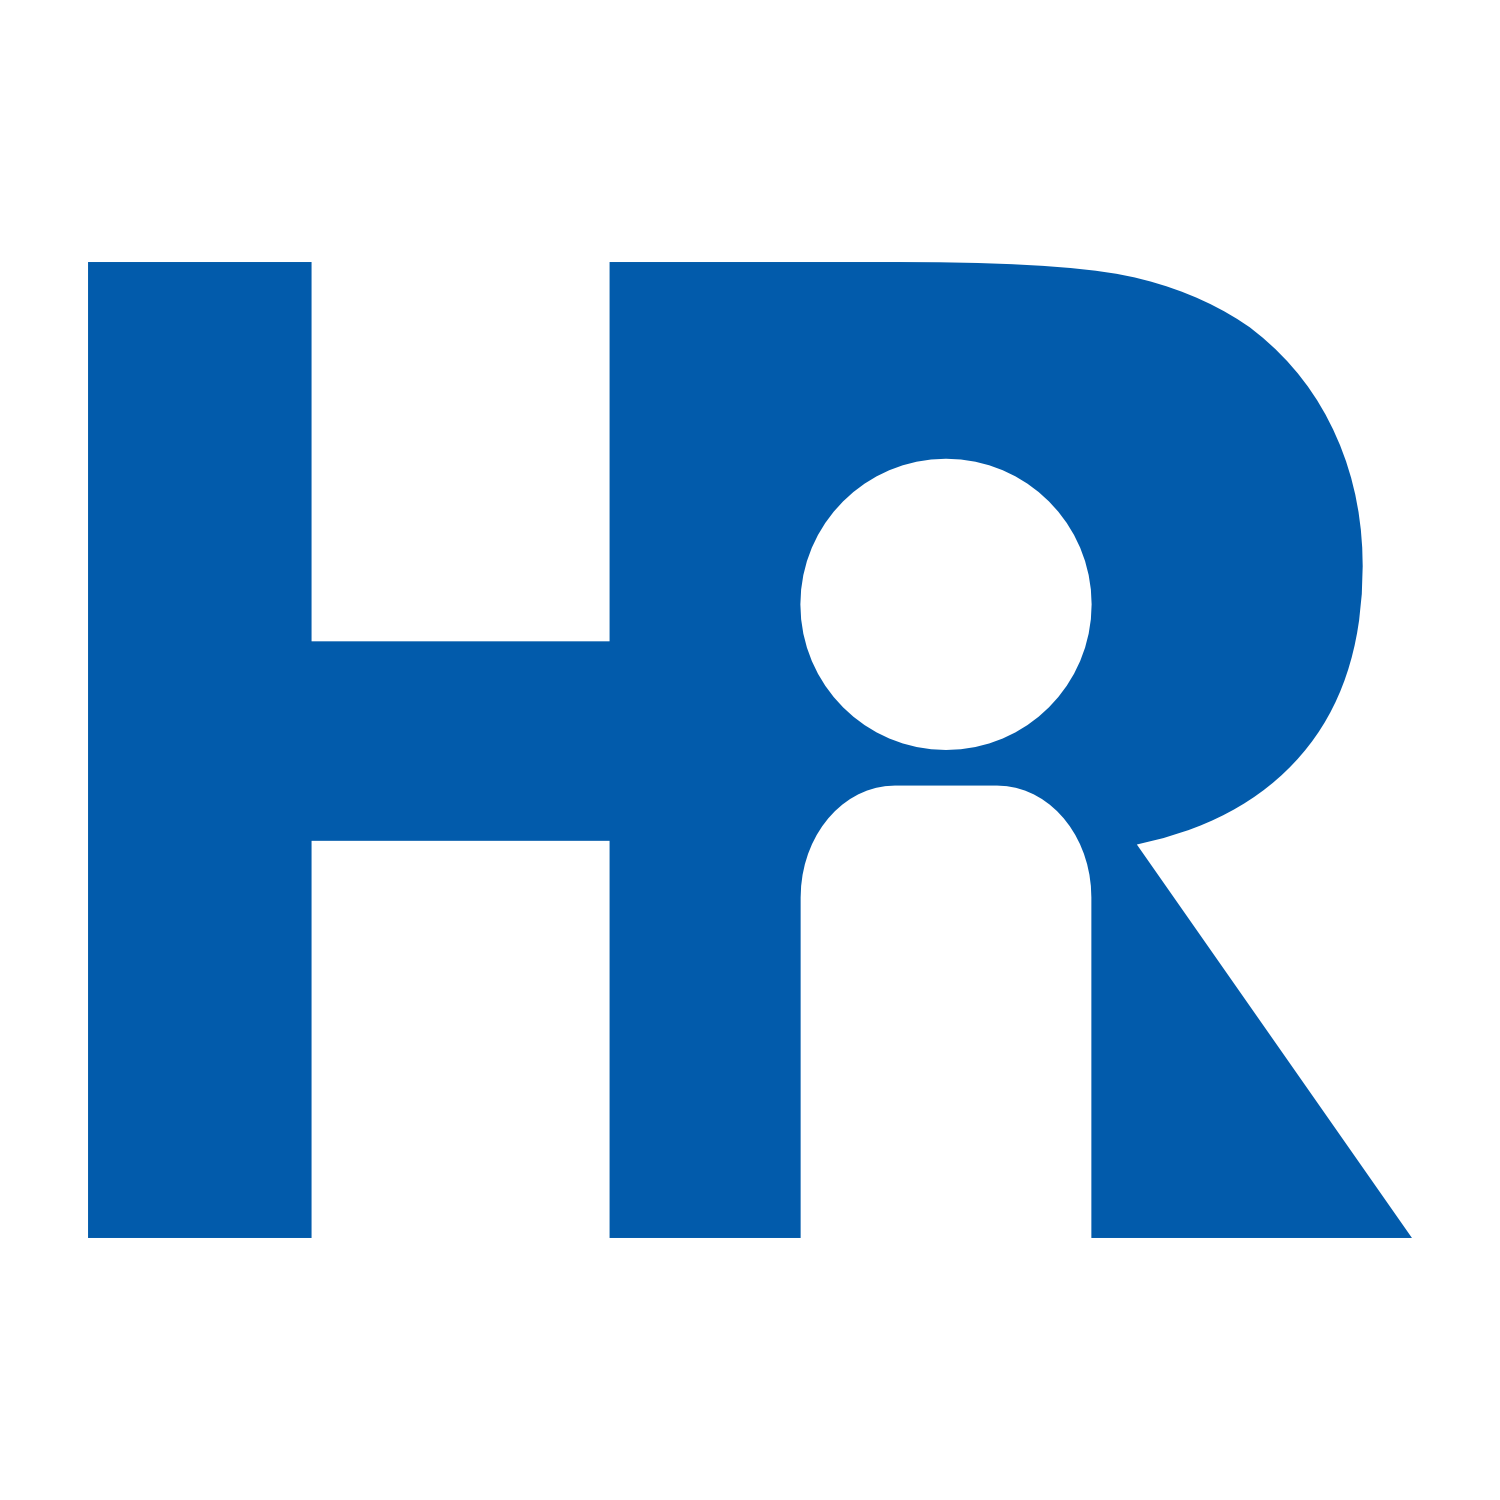 hr_logo